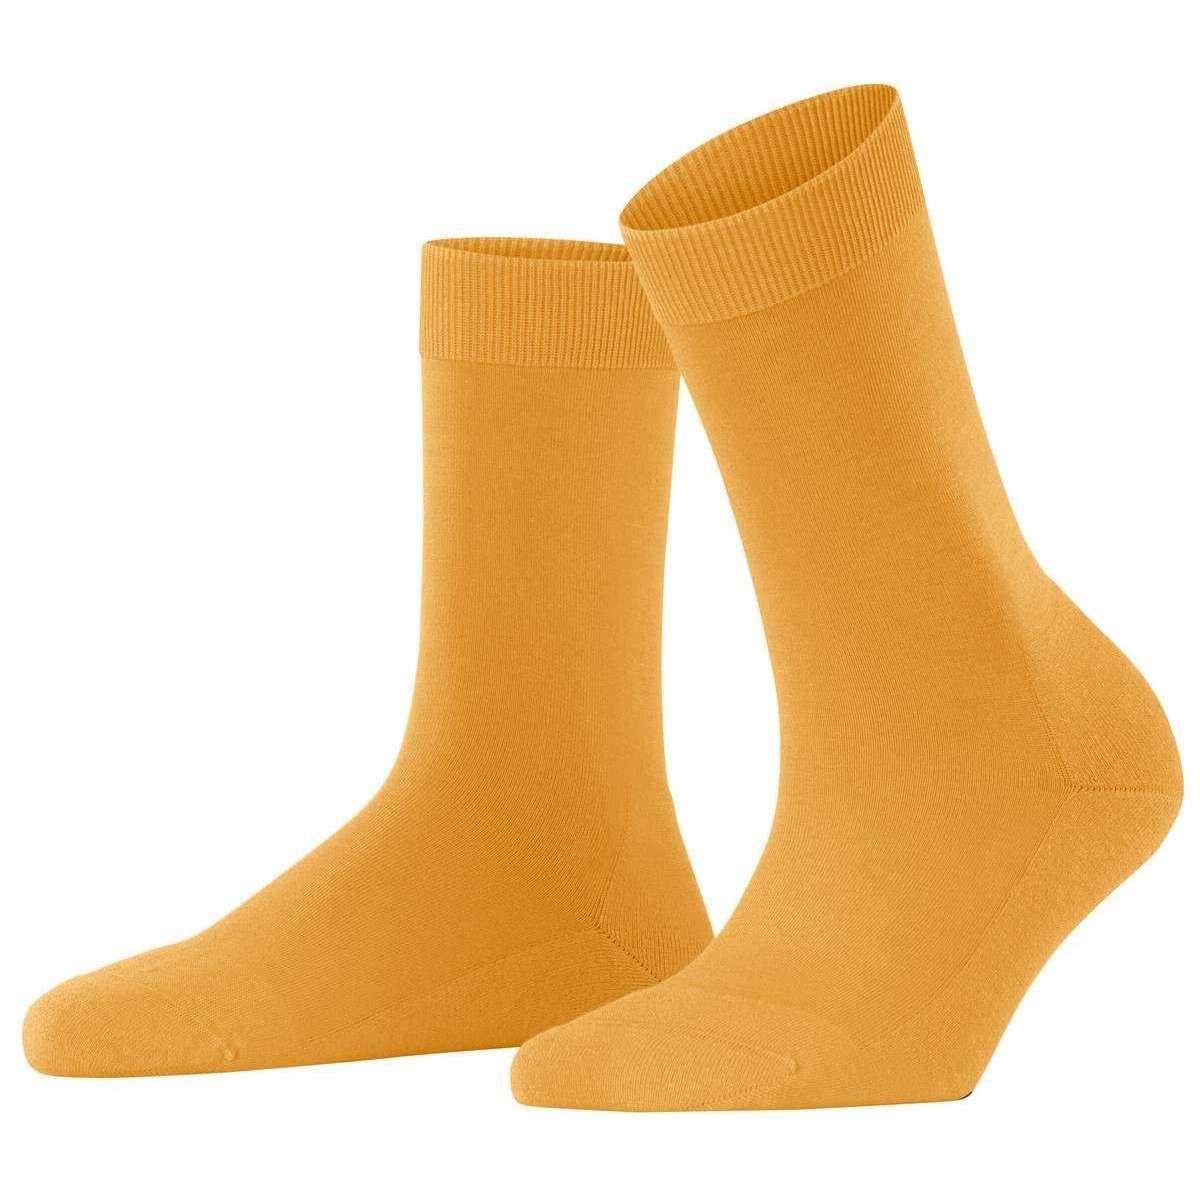 Falke Climawool Socks - Hot Ray Yellow